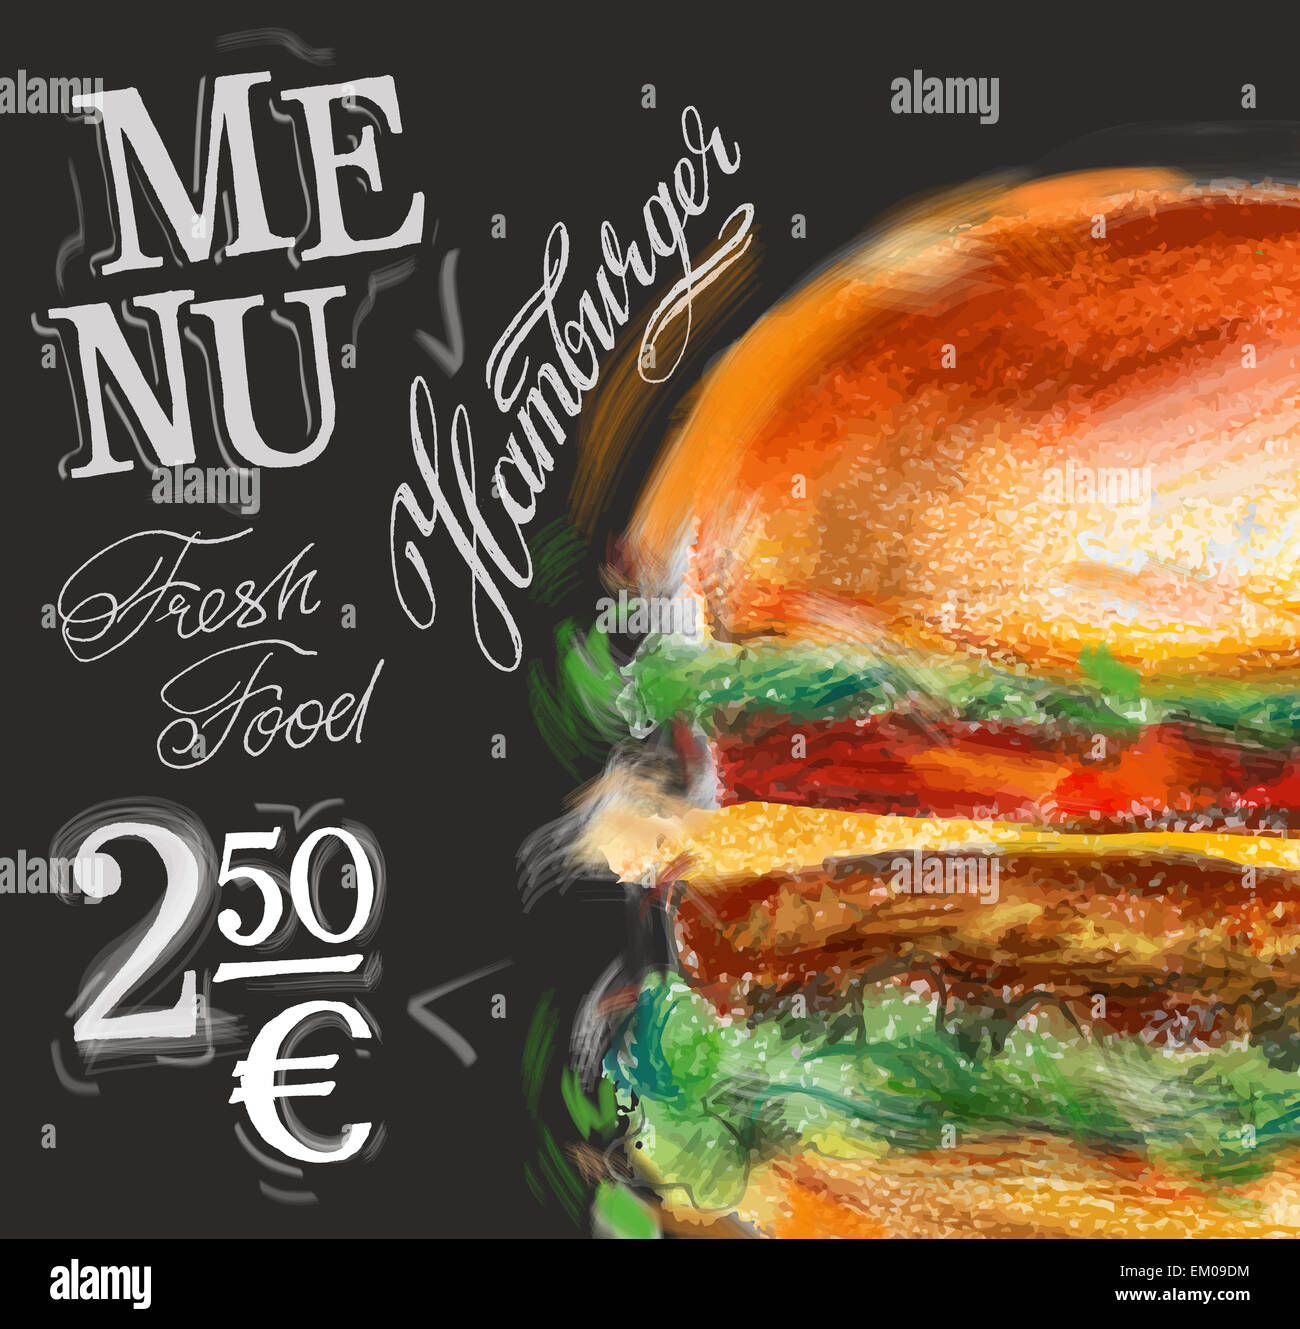 hamburger, burger vector logo design template. fast food or menu board icon. Stock Photo